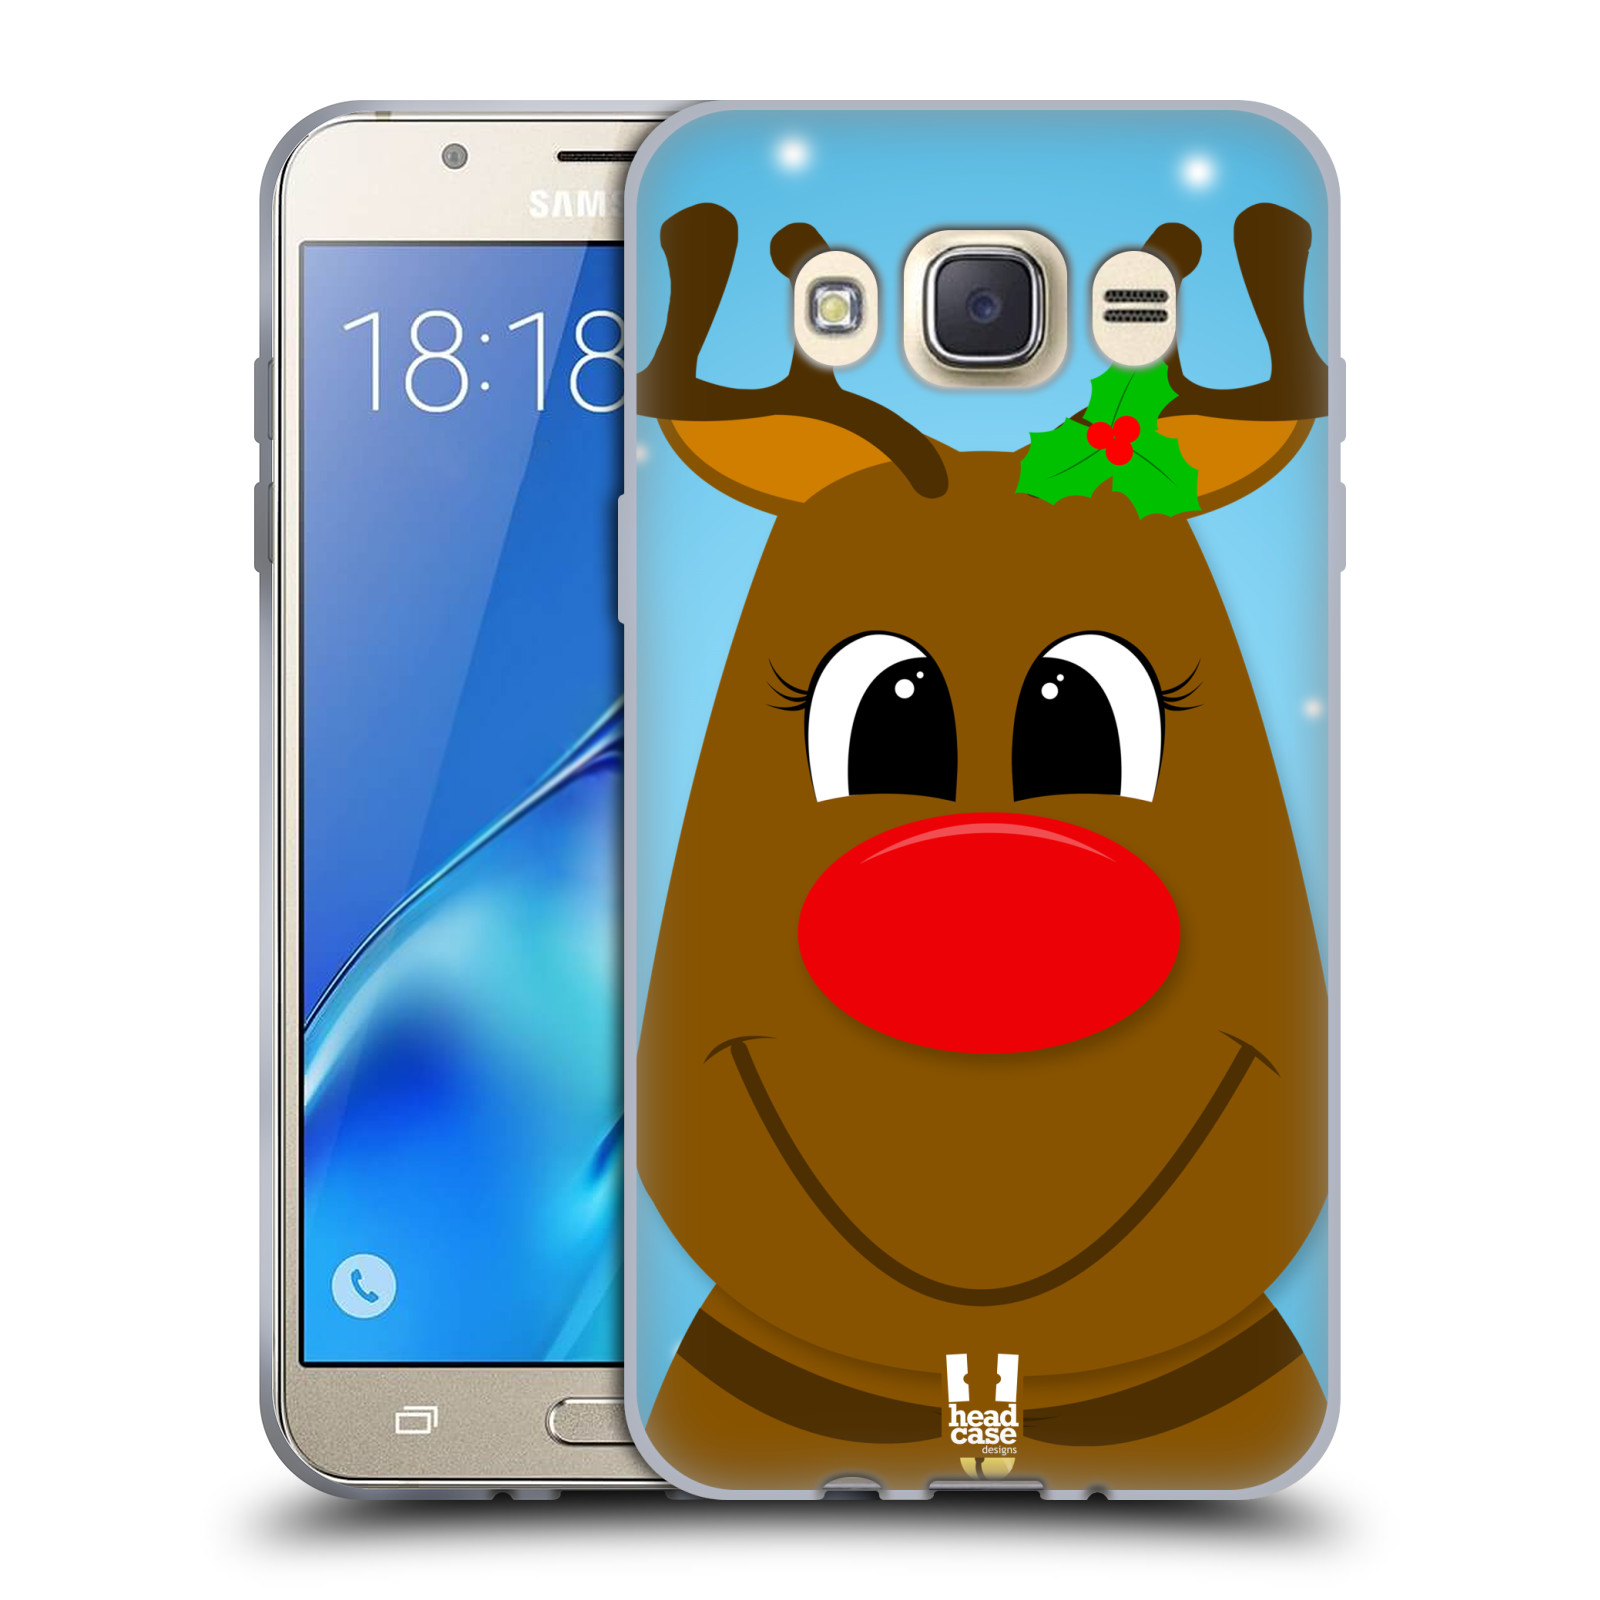 HEAD CASE silikonový obal, kryt na mobil Samsung Galaxy J7 2016 (J710, J710F) vzor Vánoční tváře kreslené SOB RUDOLF